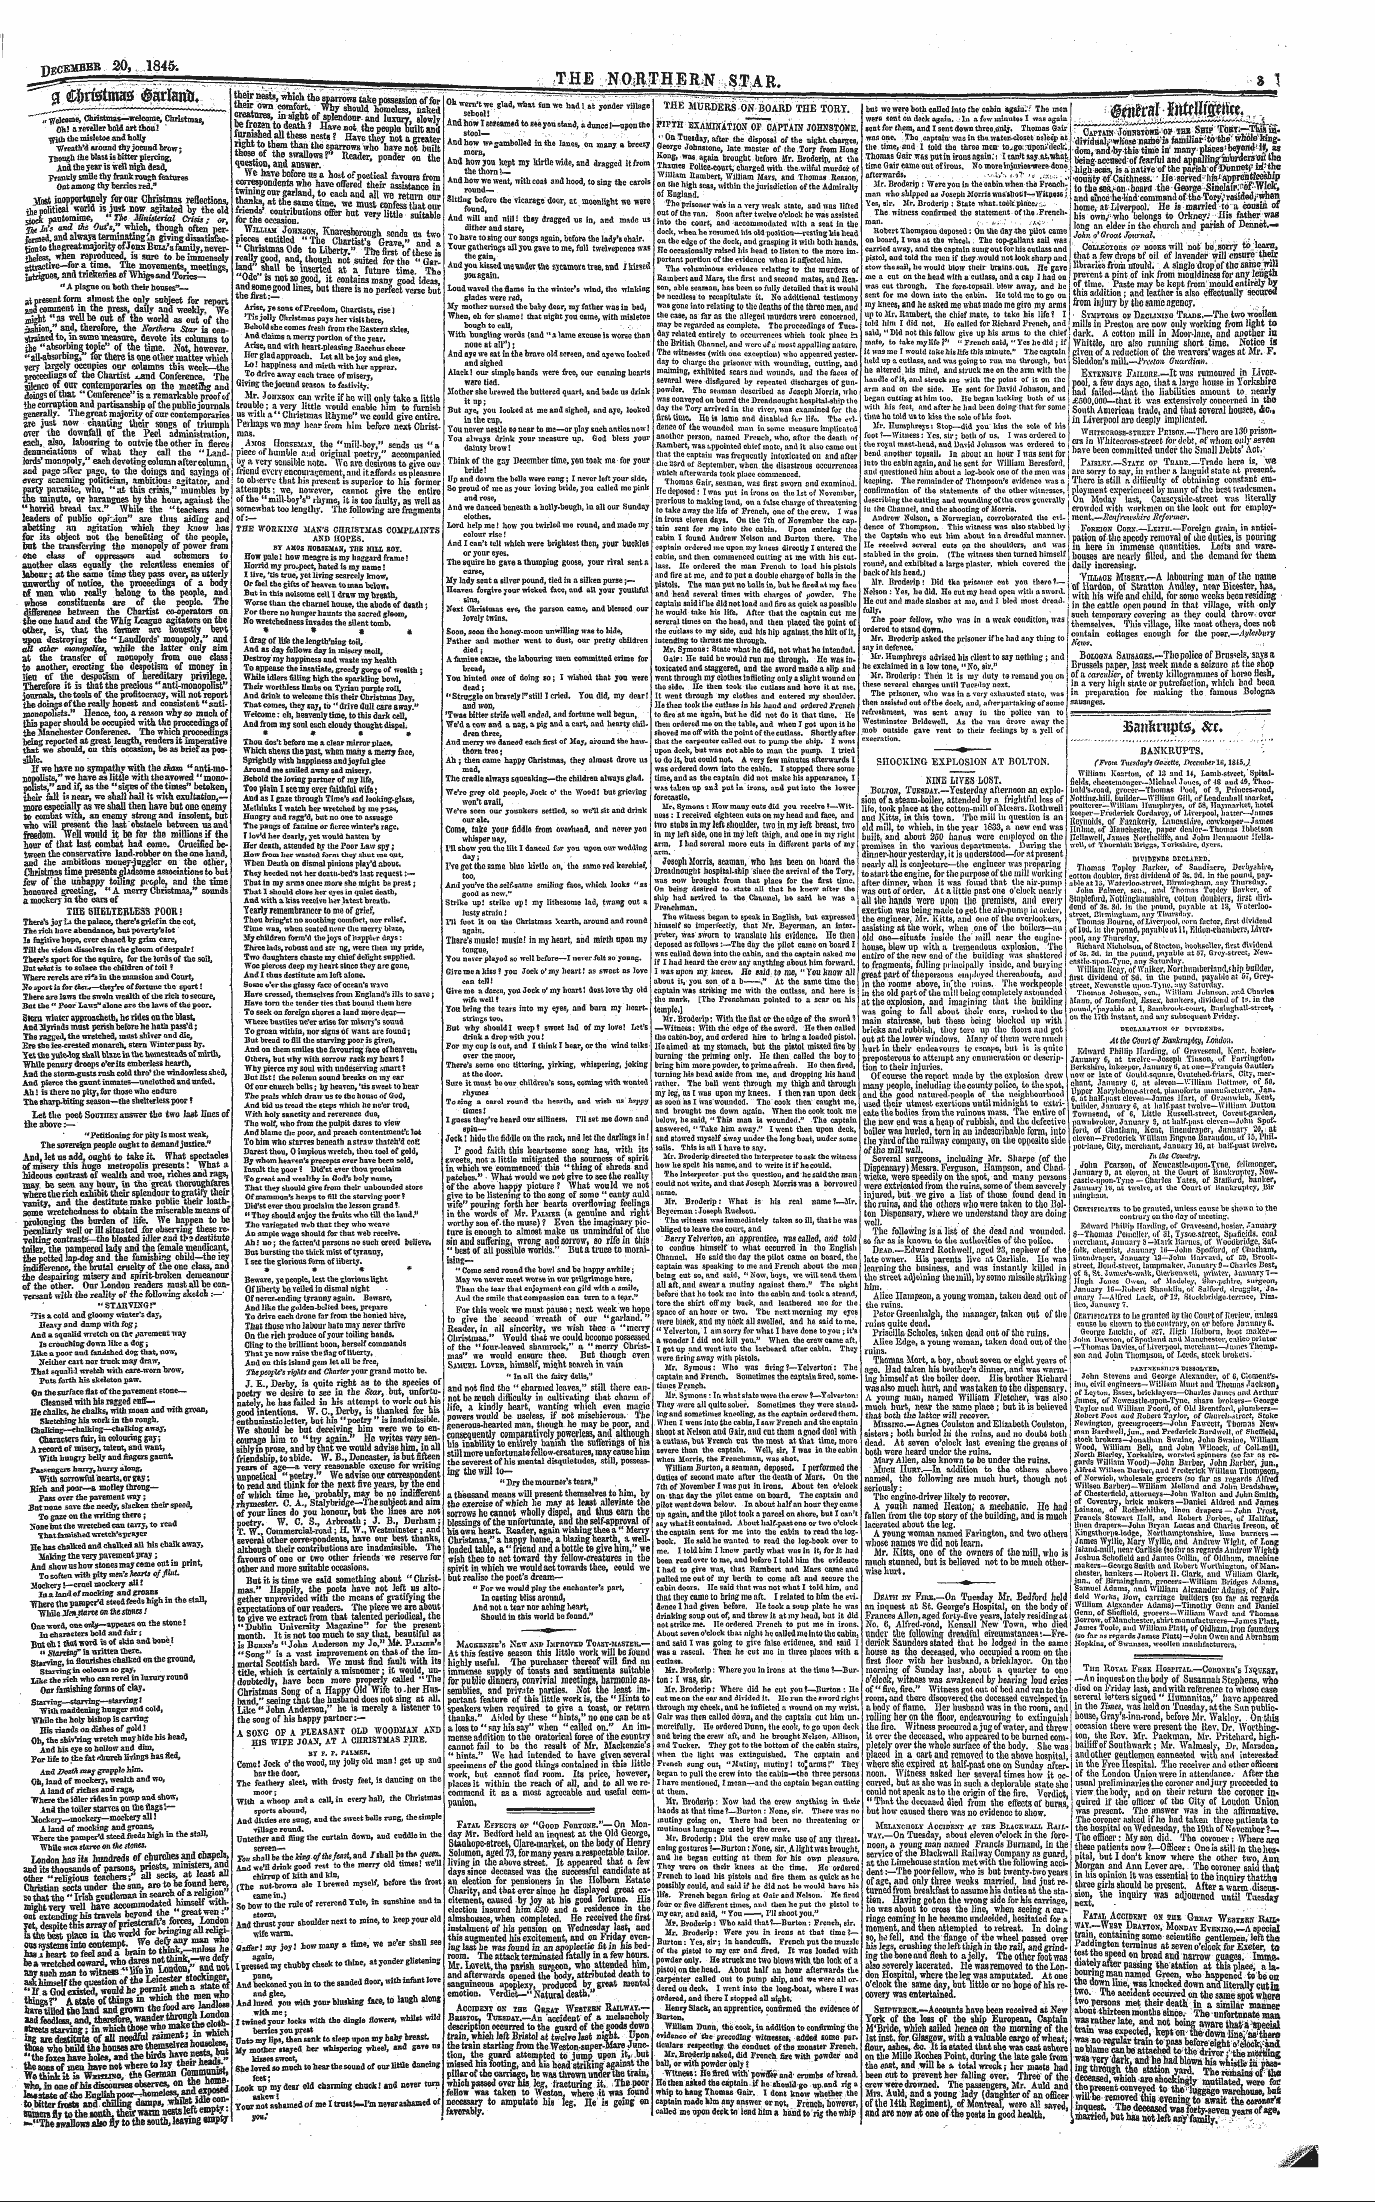 Northern Star (1837-1852): jS F Y, 4th edition - - Captain Johnstome- Oj?Thb . Bfflp Loey...